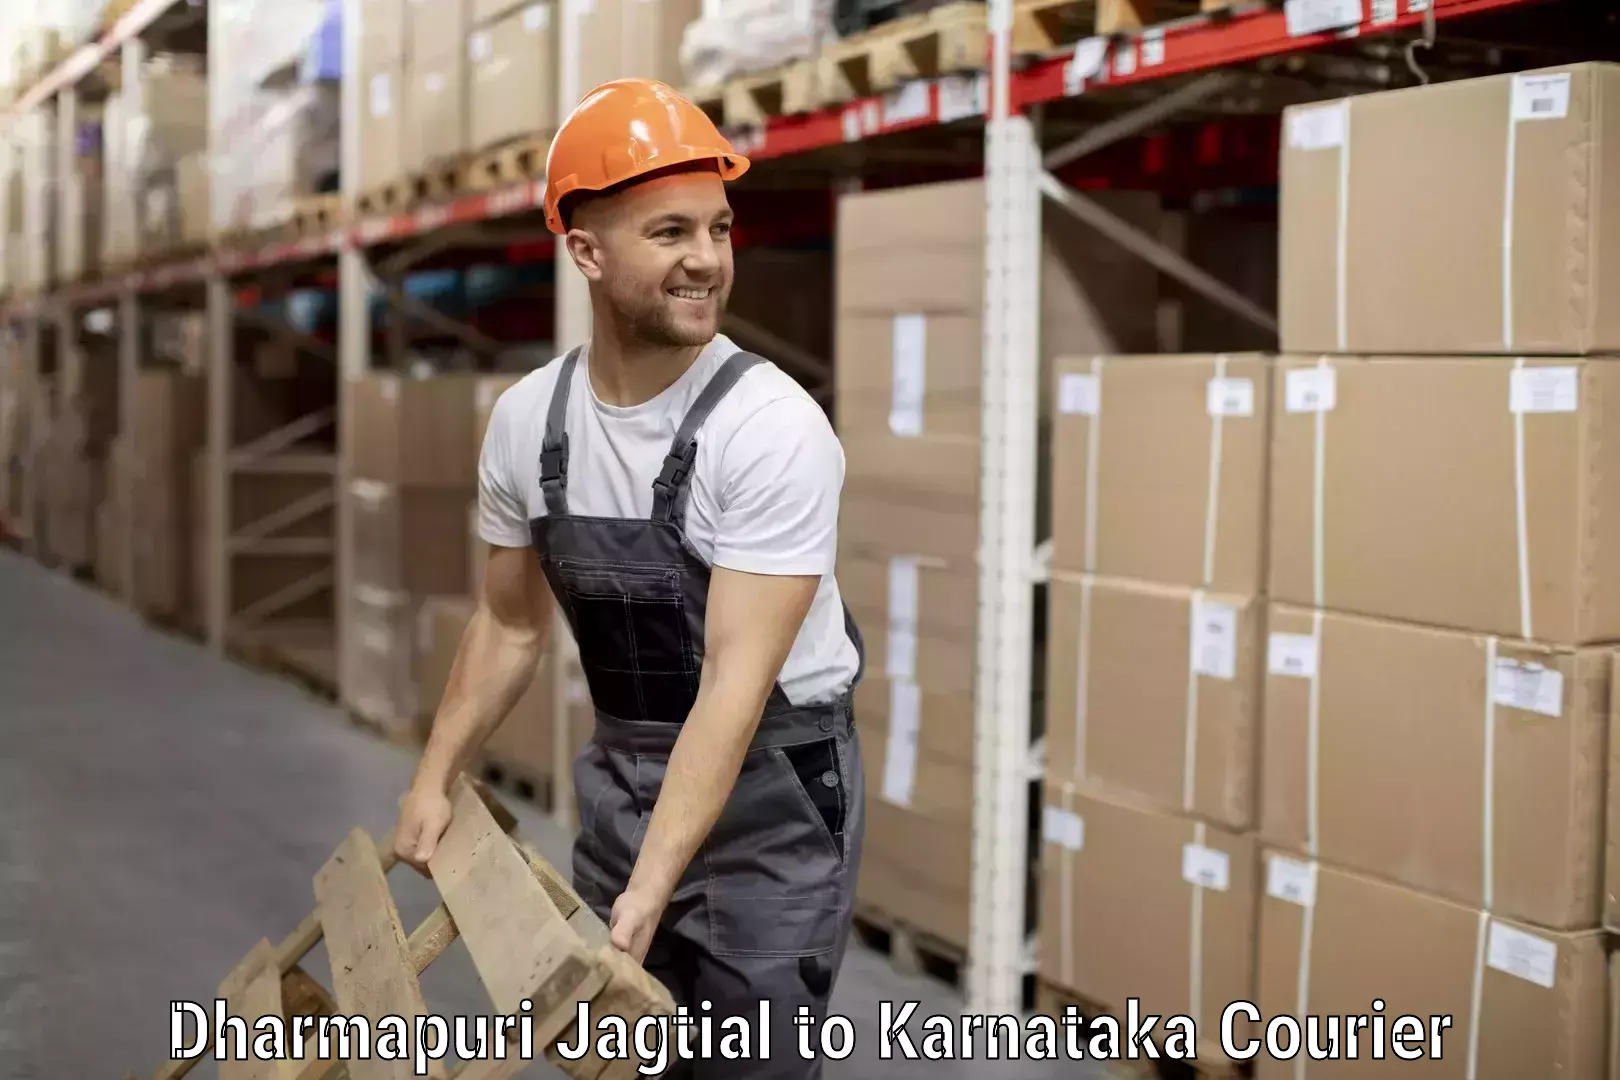 Luggage shipment processing Dharmapuri Jagtial to Ramanathapura